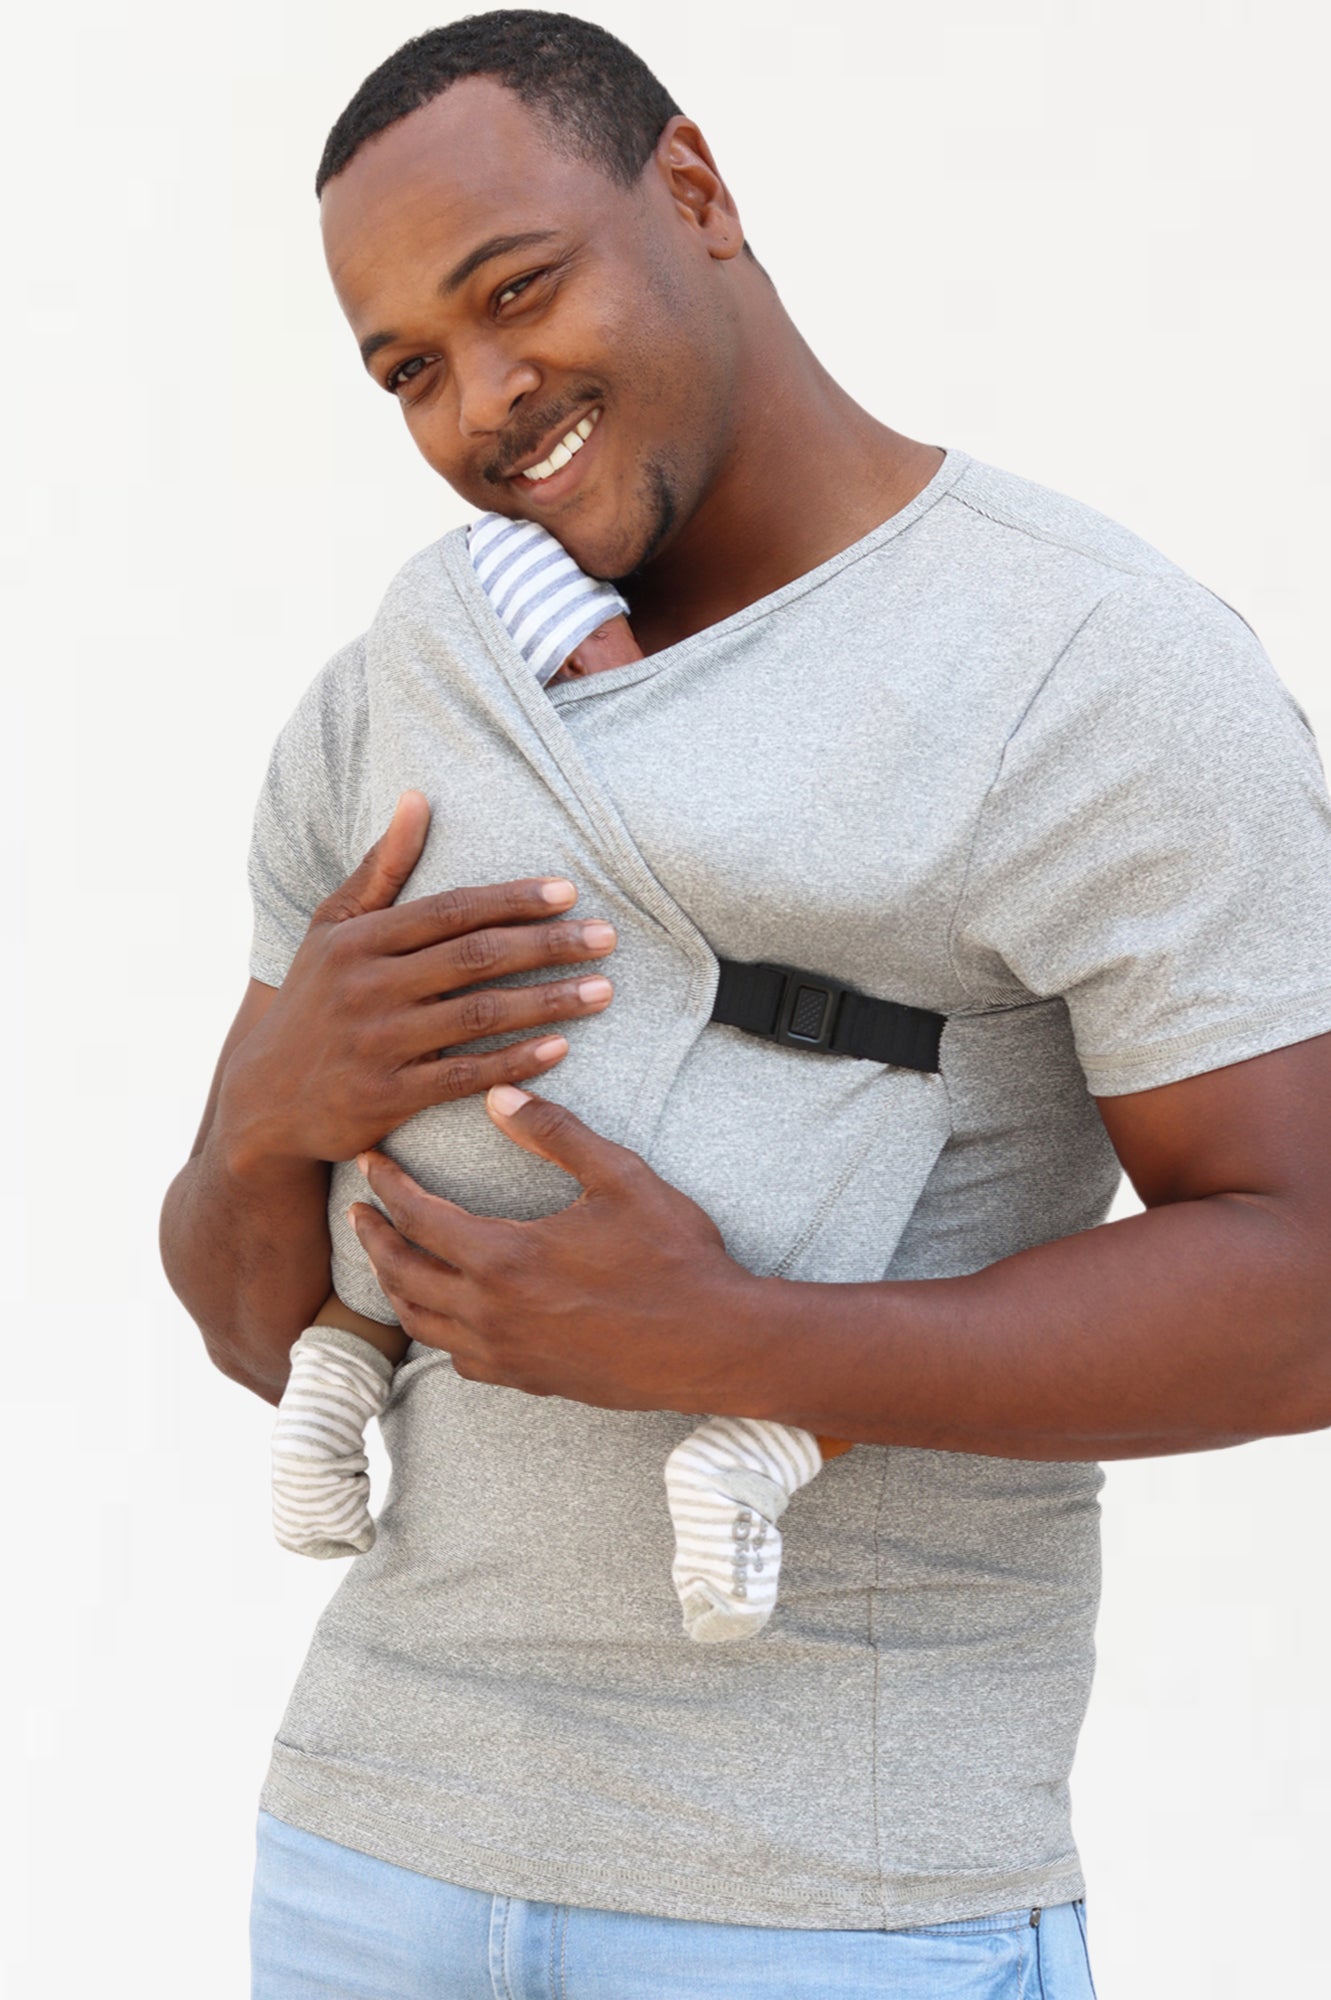 Men's Newborn Baby Carriers, Infant Wraps